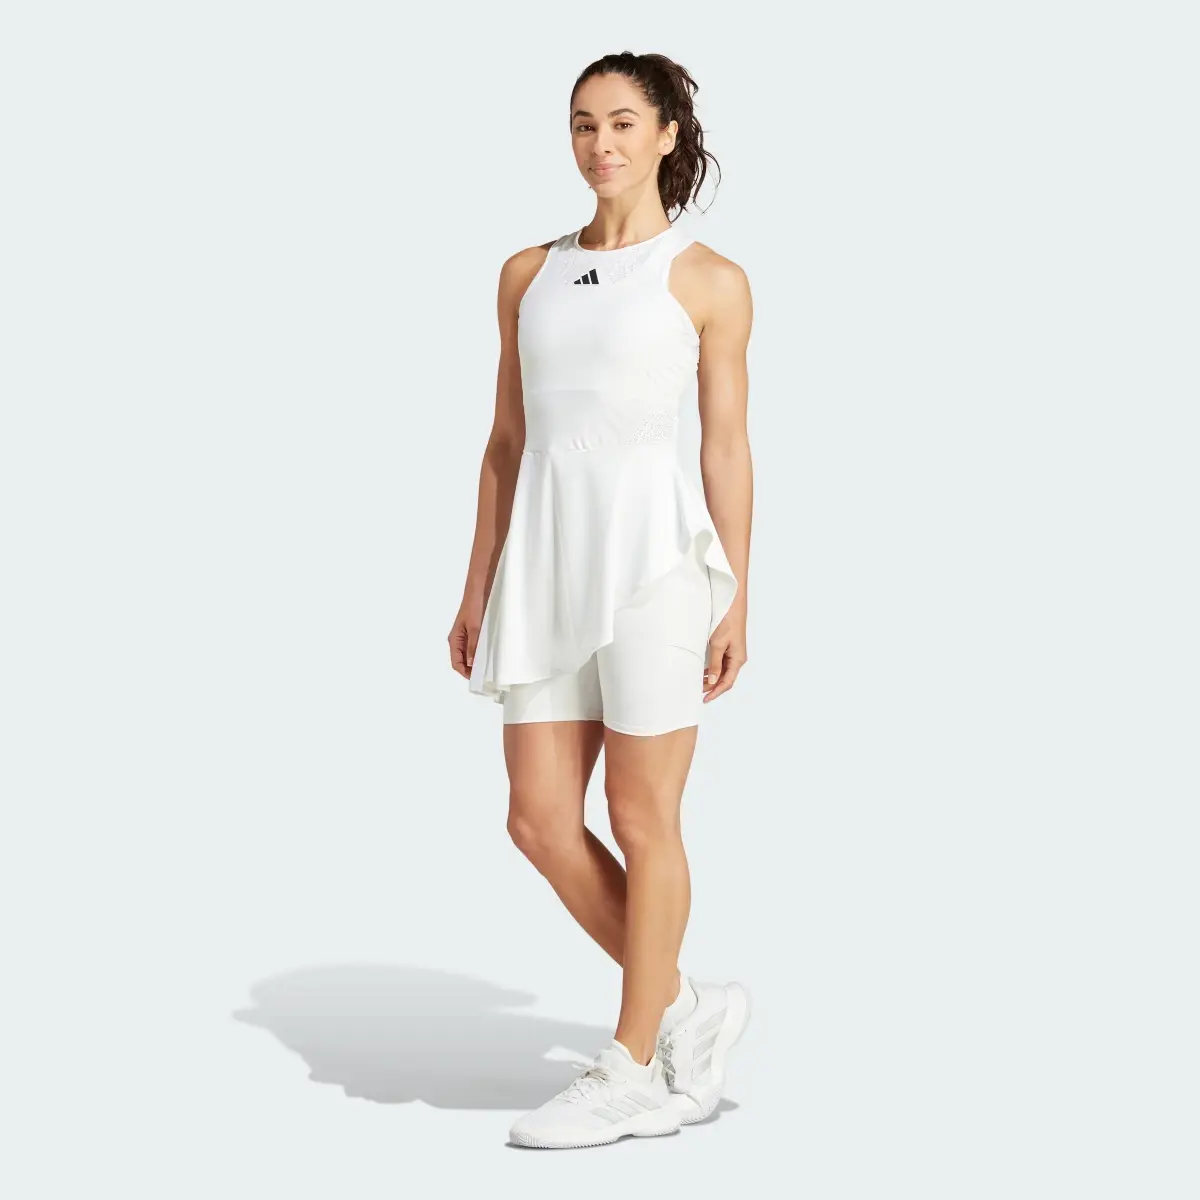 Adidas AEROREADY Pro Tennis Dress. 2